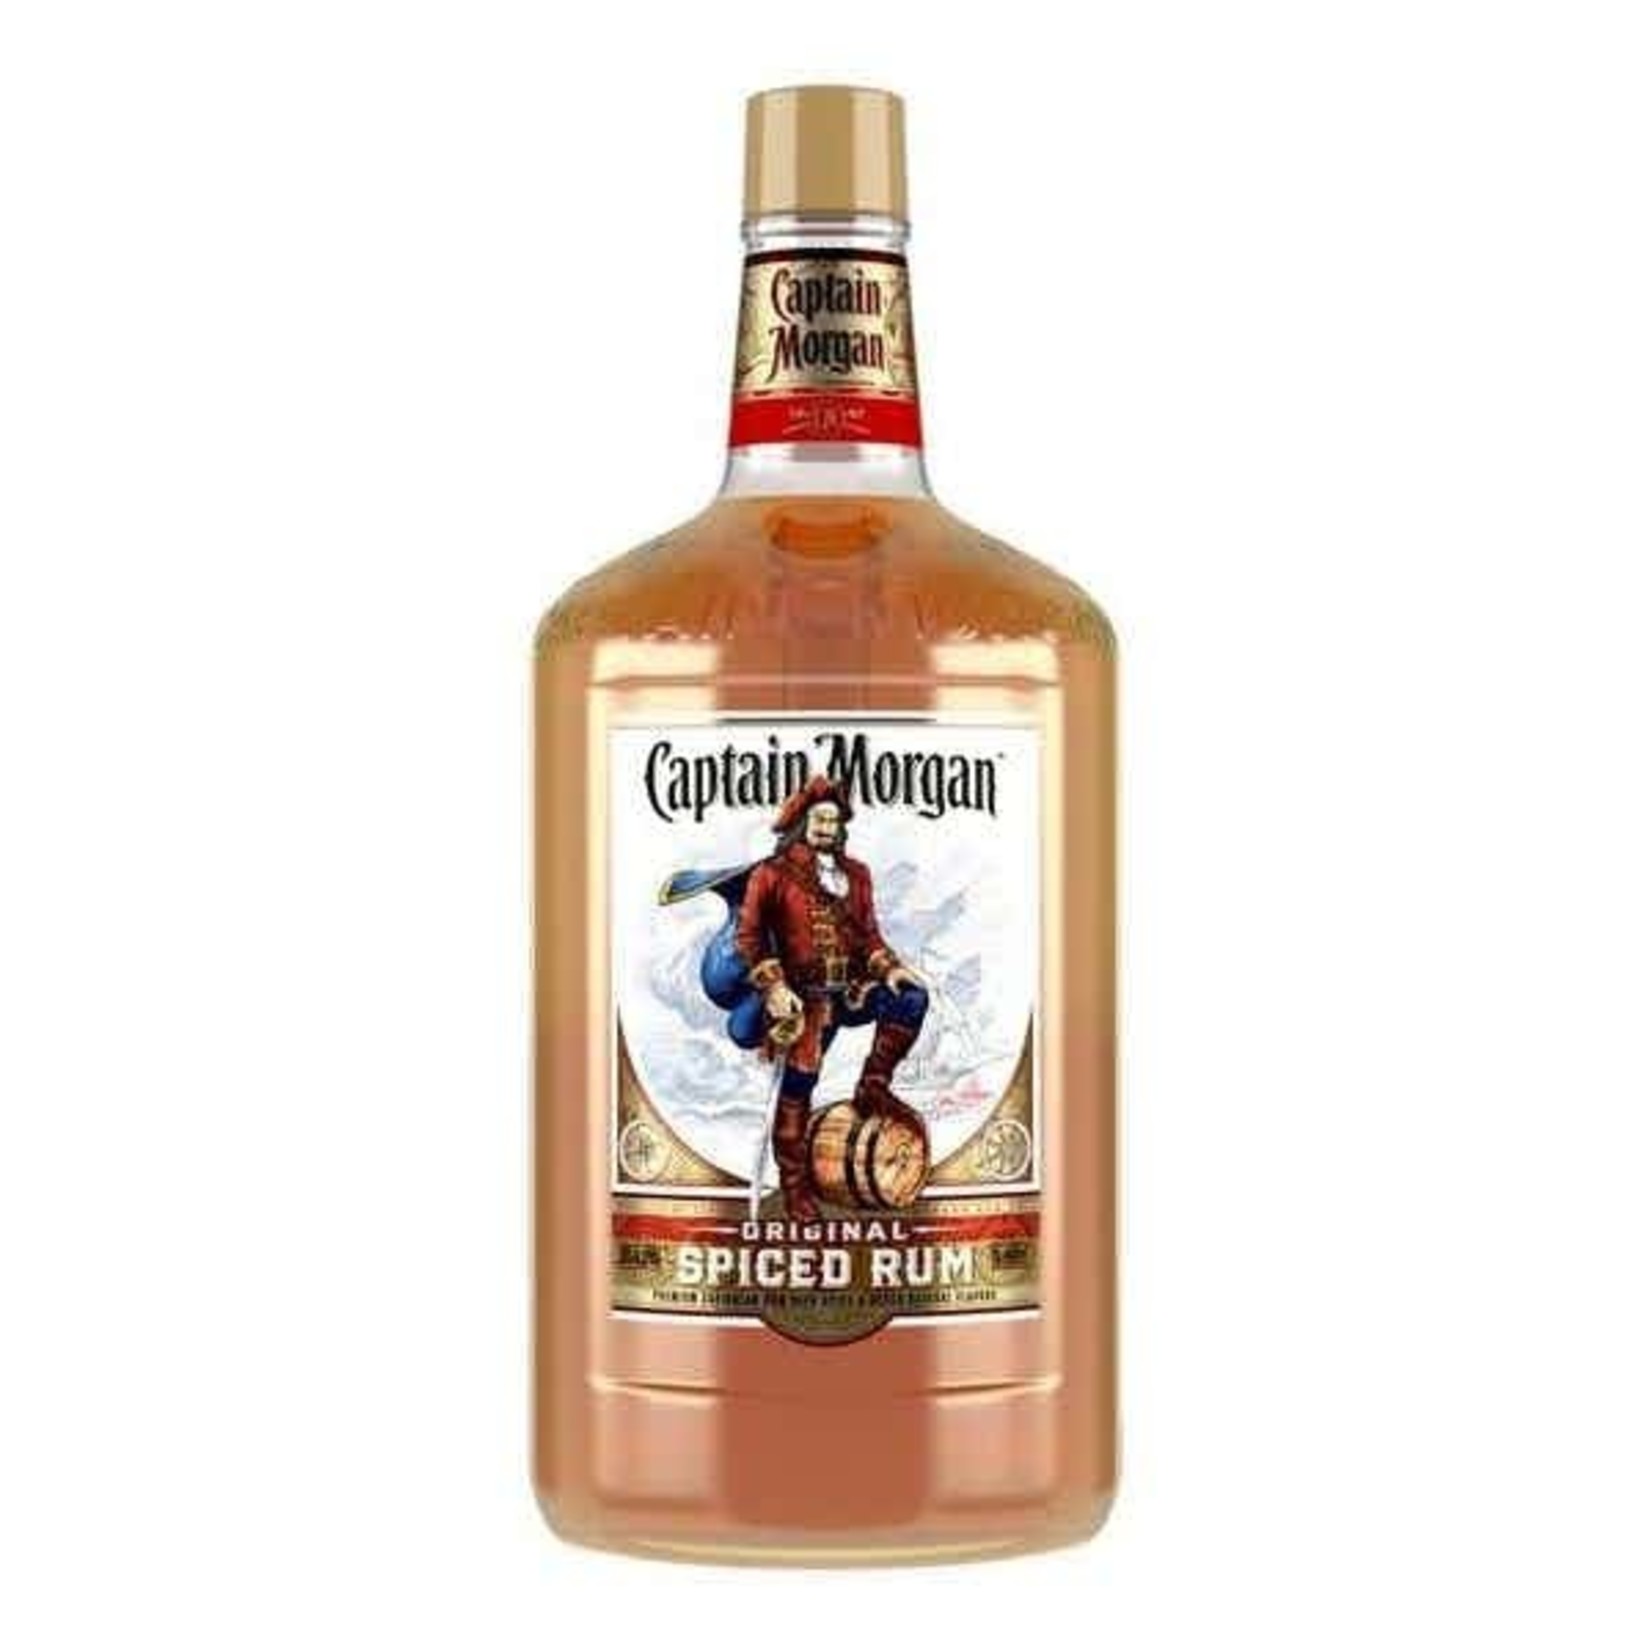 Captain Morgan Captain Morgan Original Spiced Rum